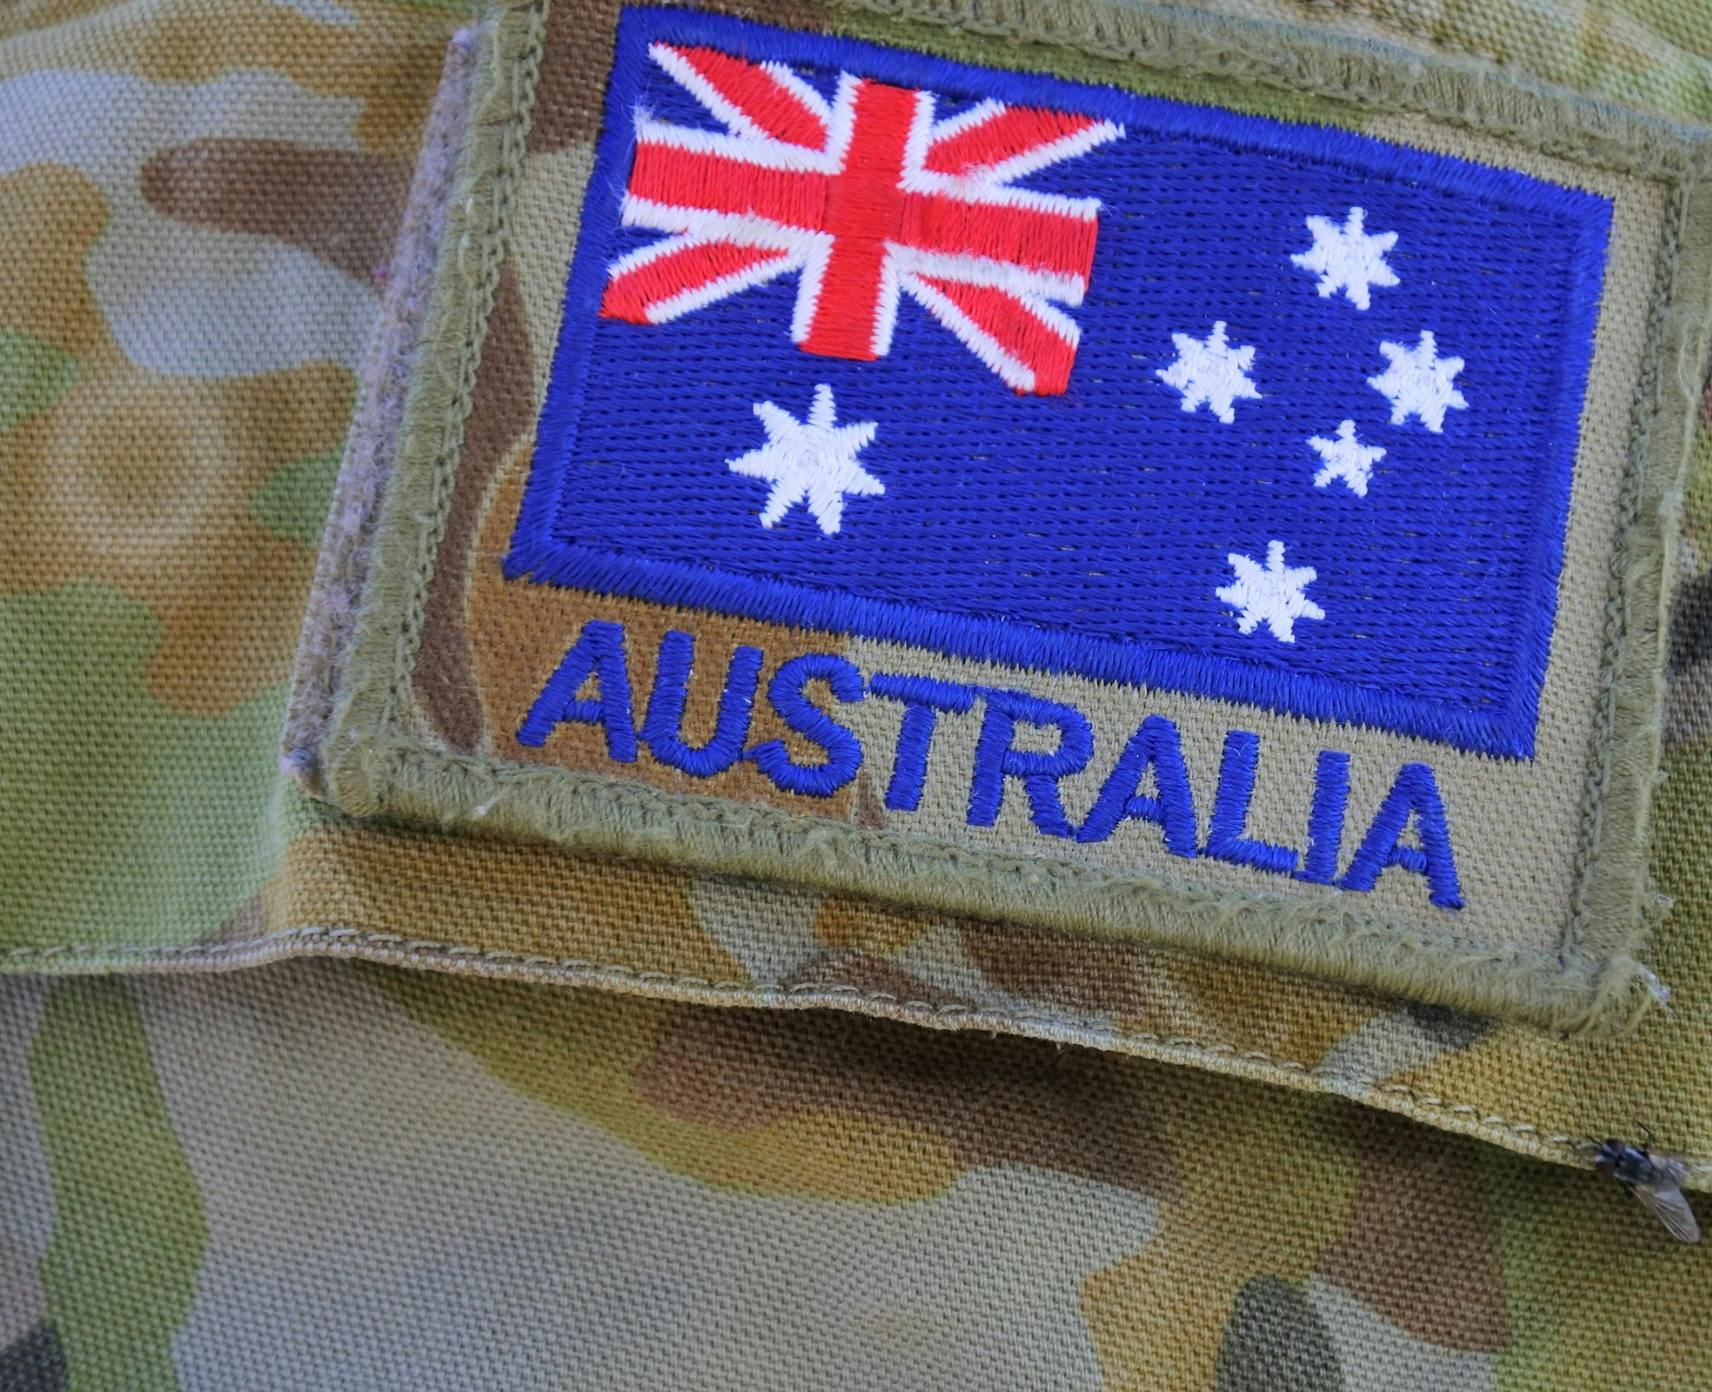 Close-up of Australian flag on military camouflage uniform